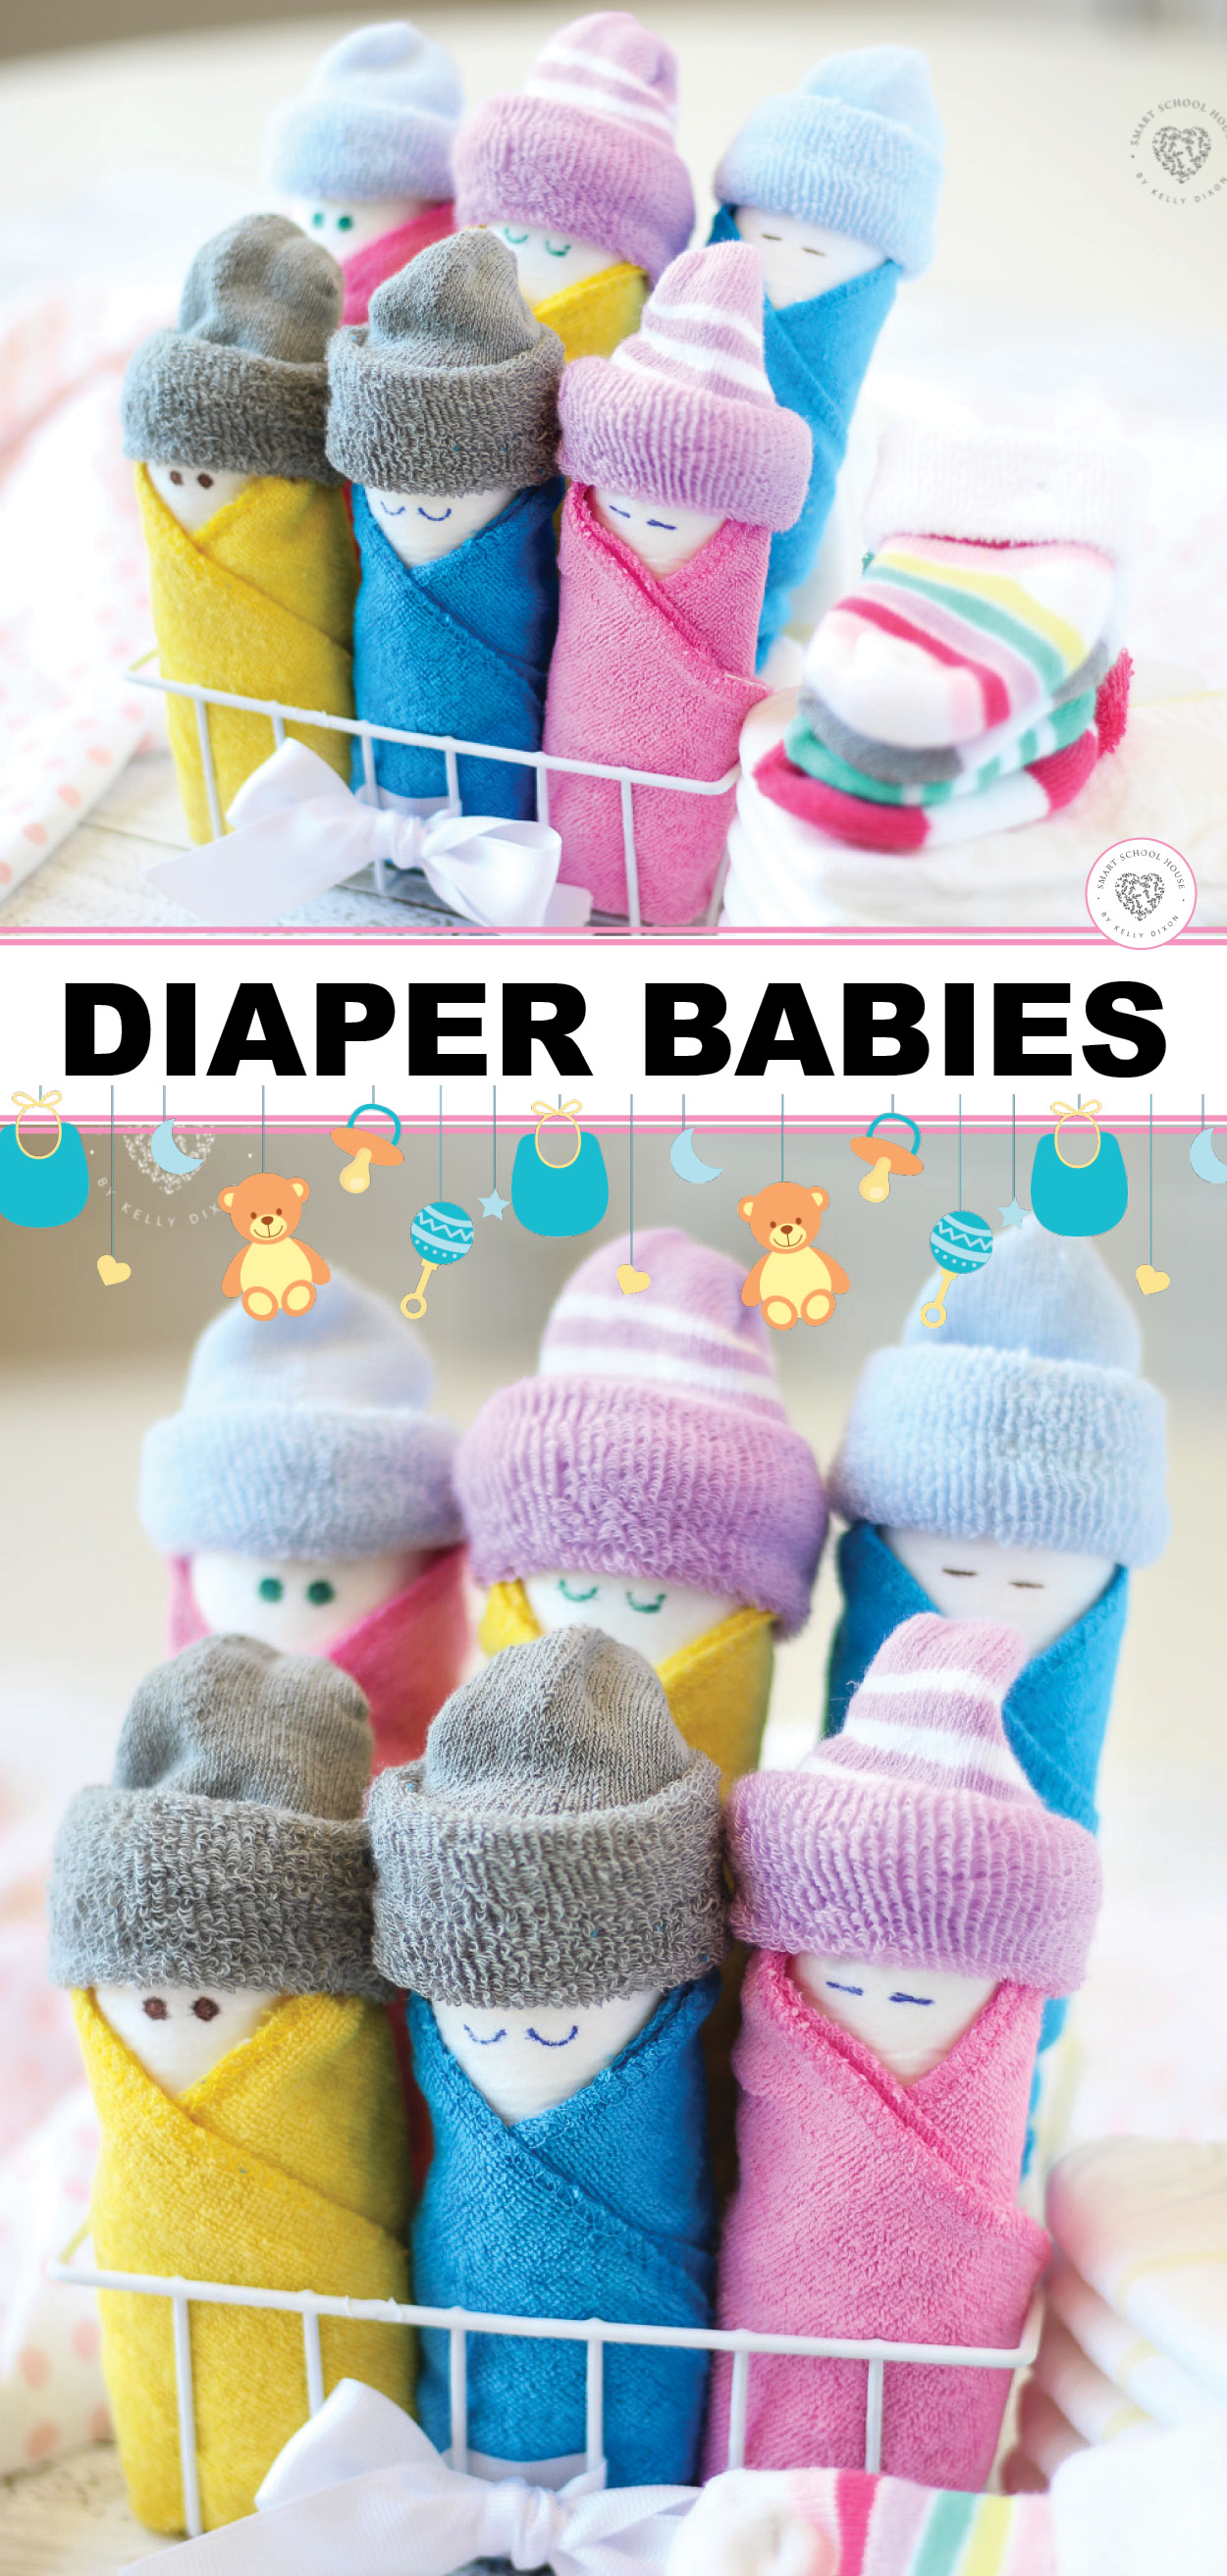 Diaper Babies